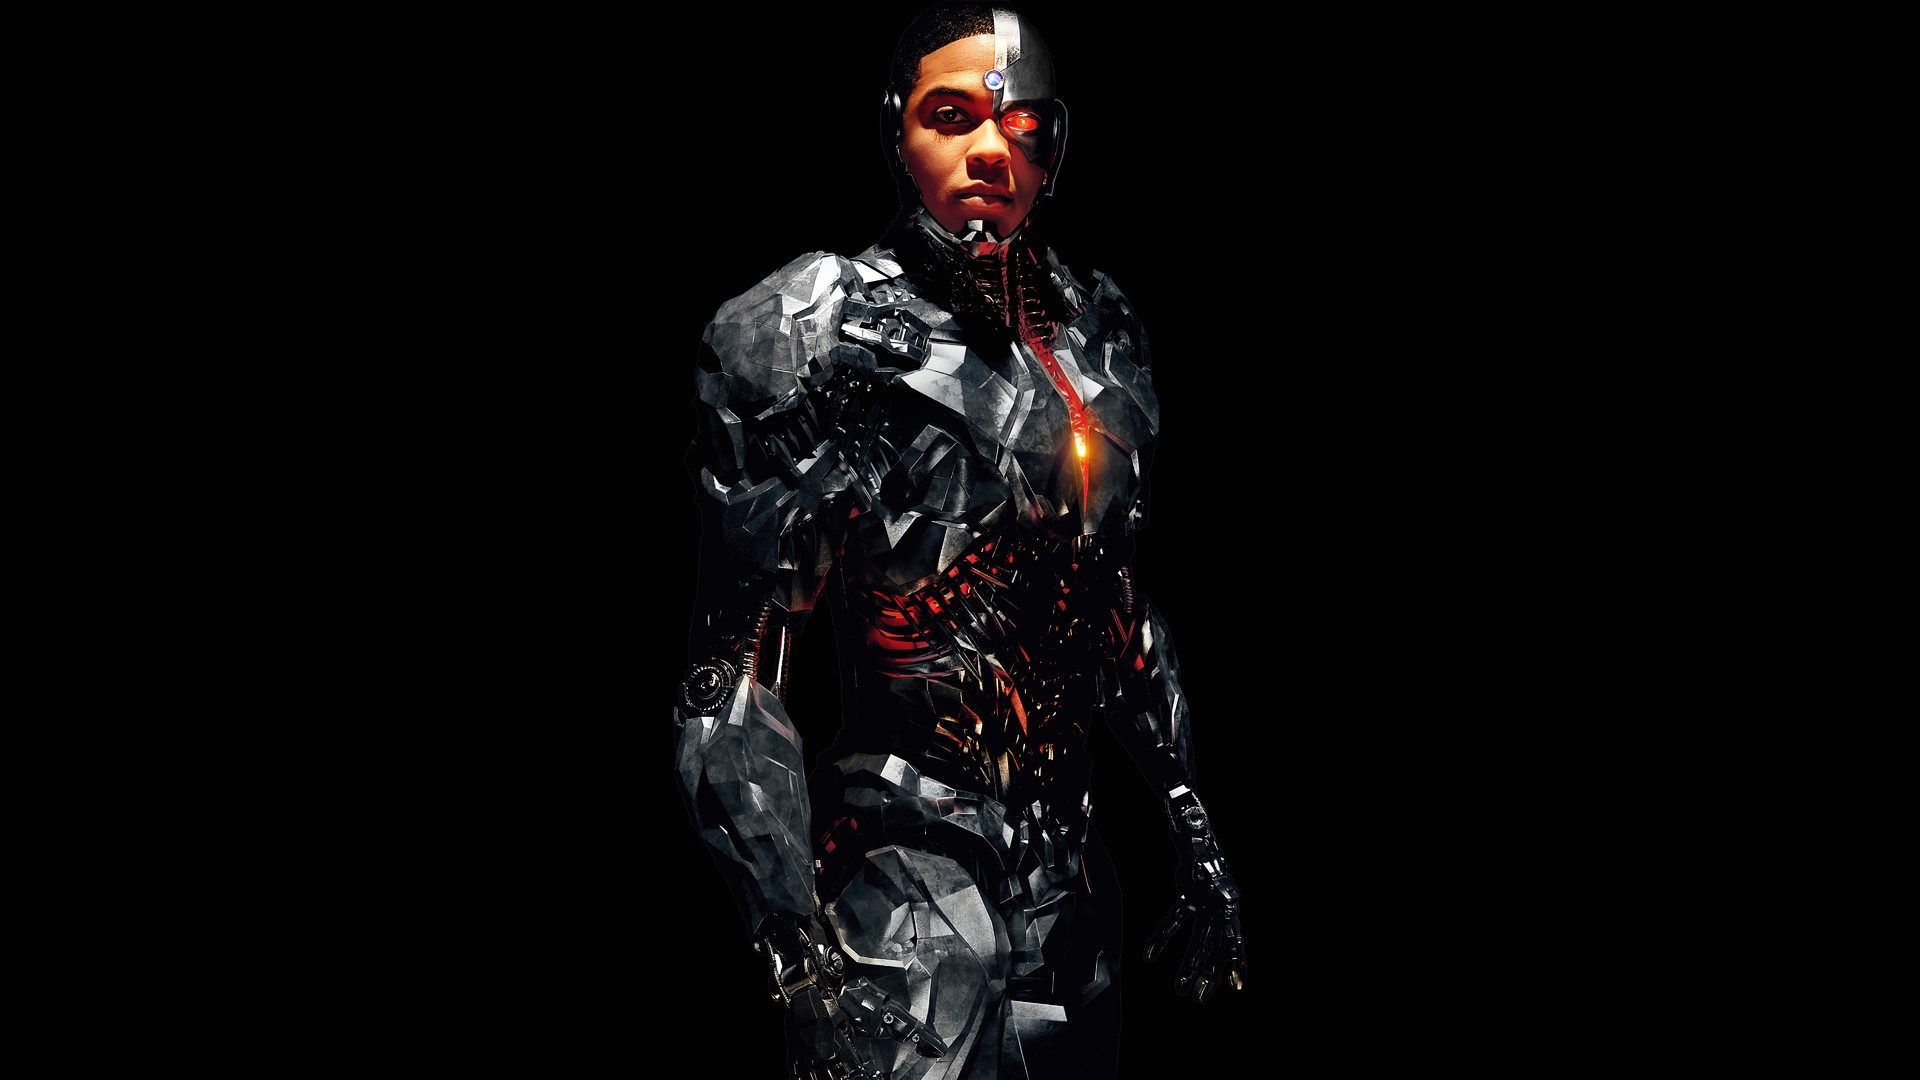 Cyborg Dc Ics HD Wallpaper And Background